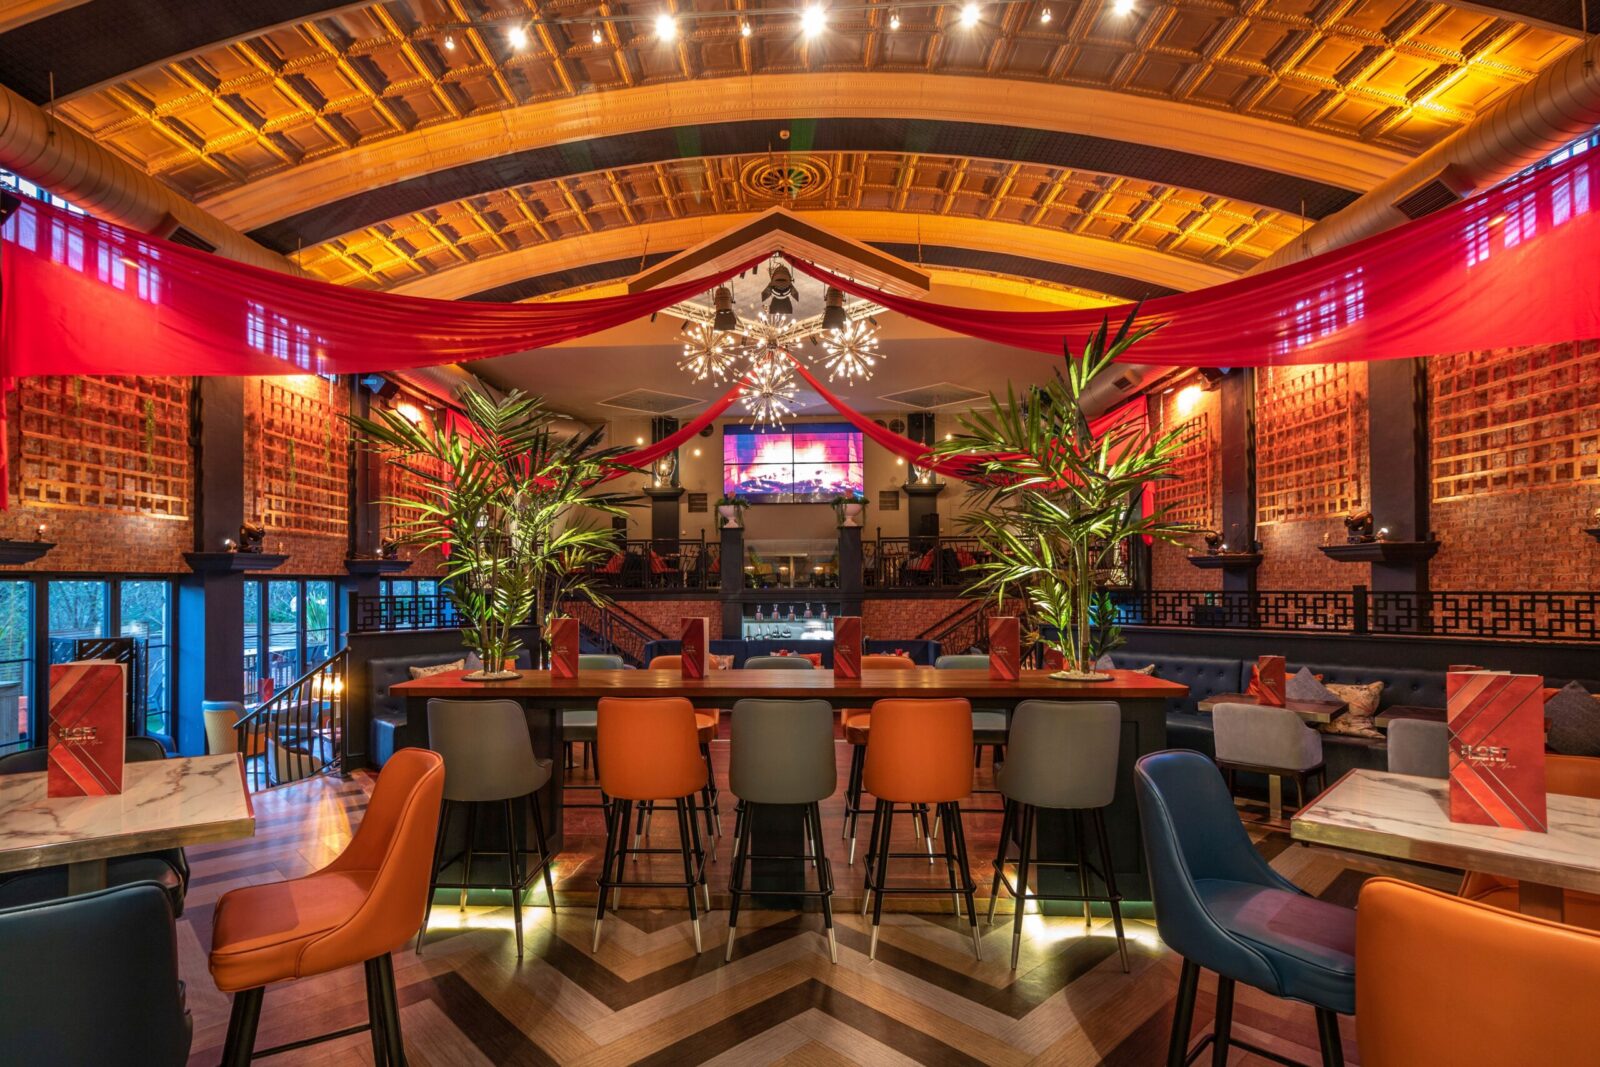 Loft Steakhouse Bar Gallery - The Loft Lounge & Bar